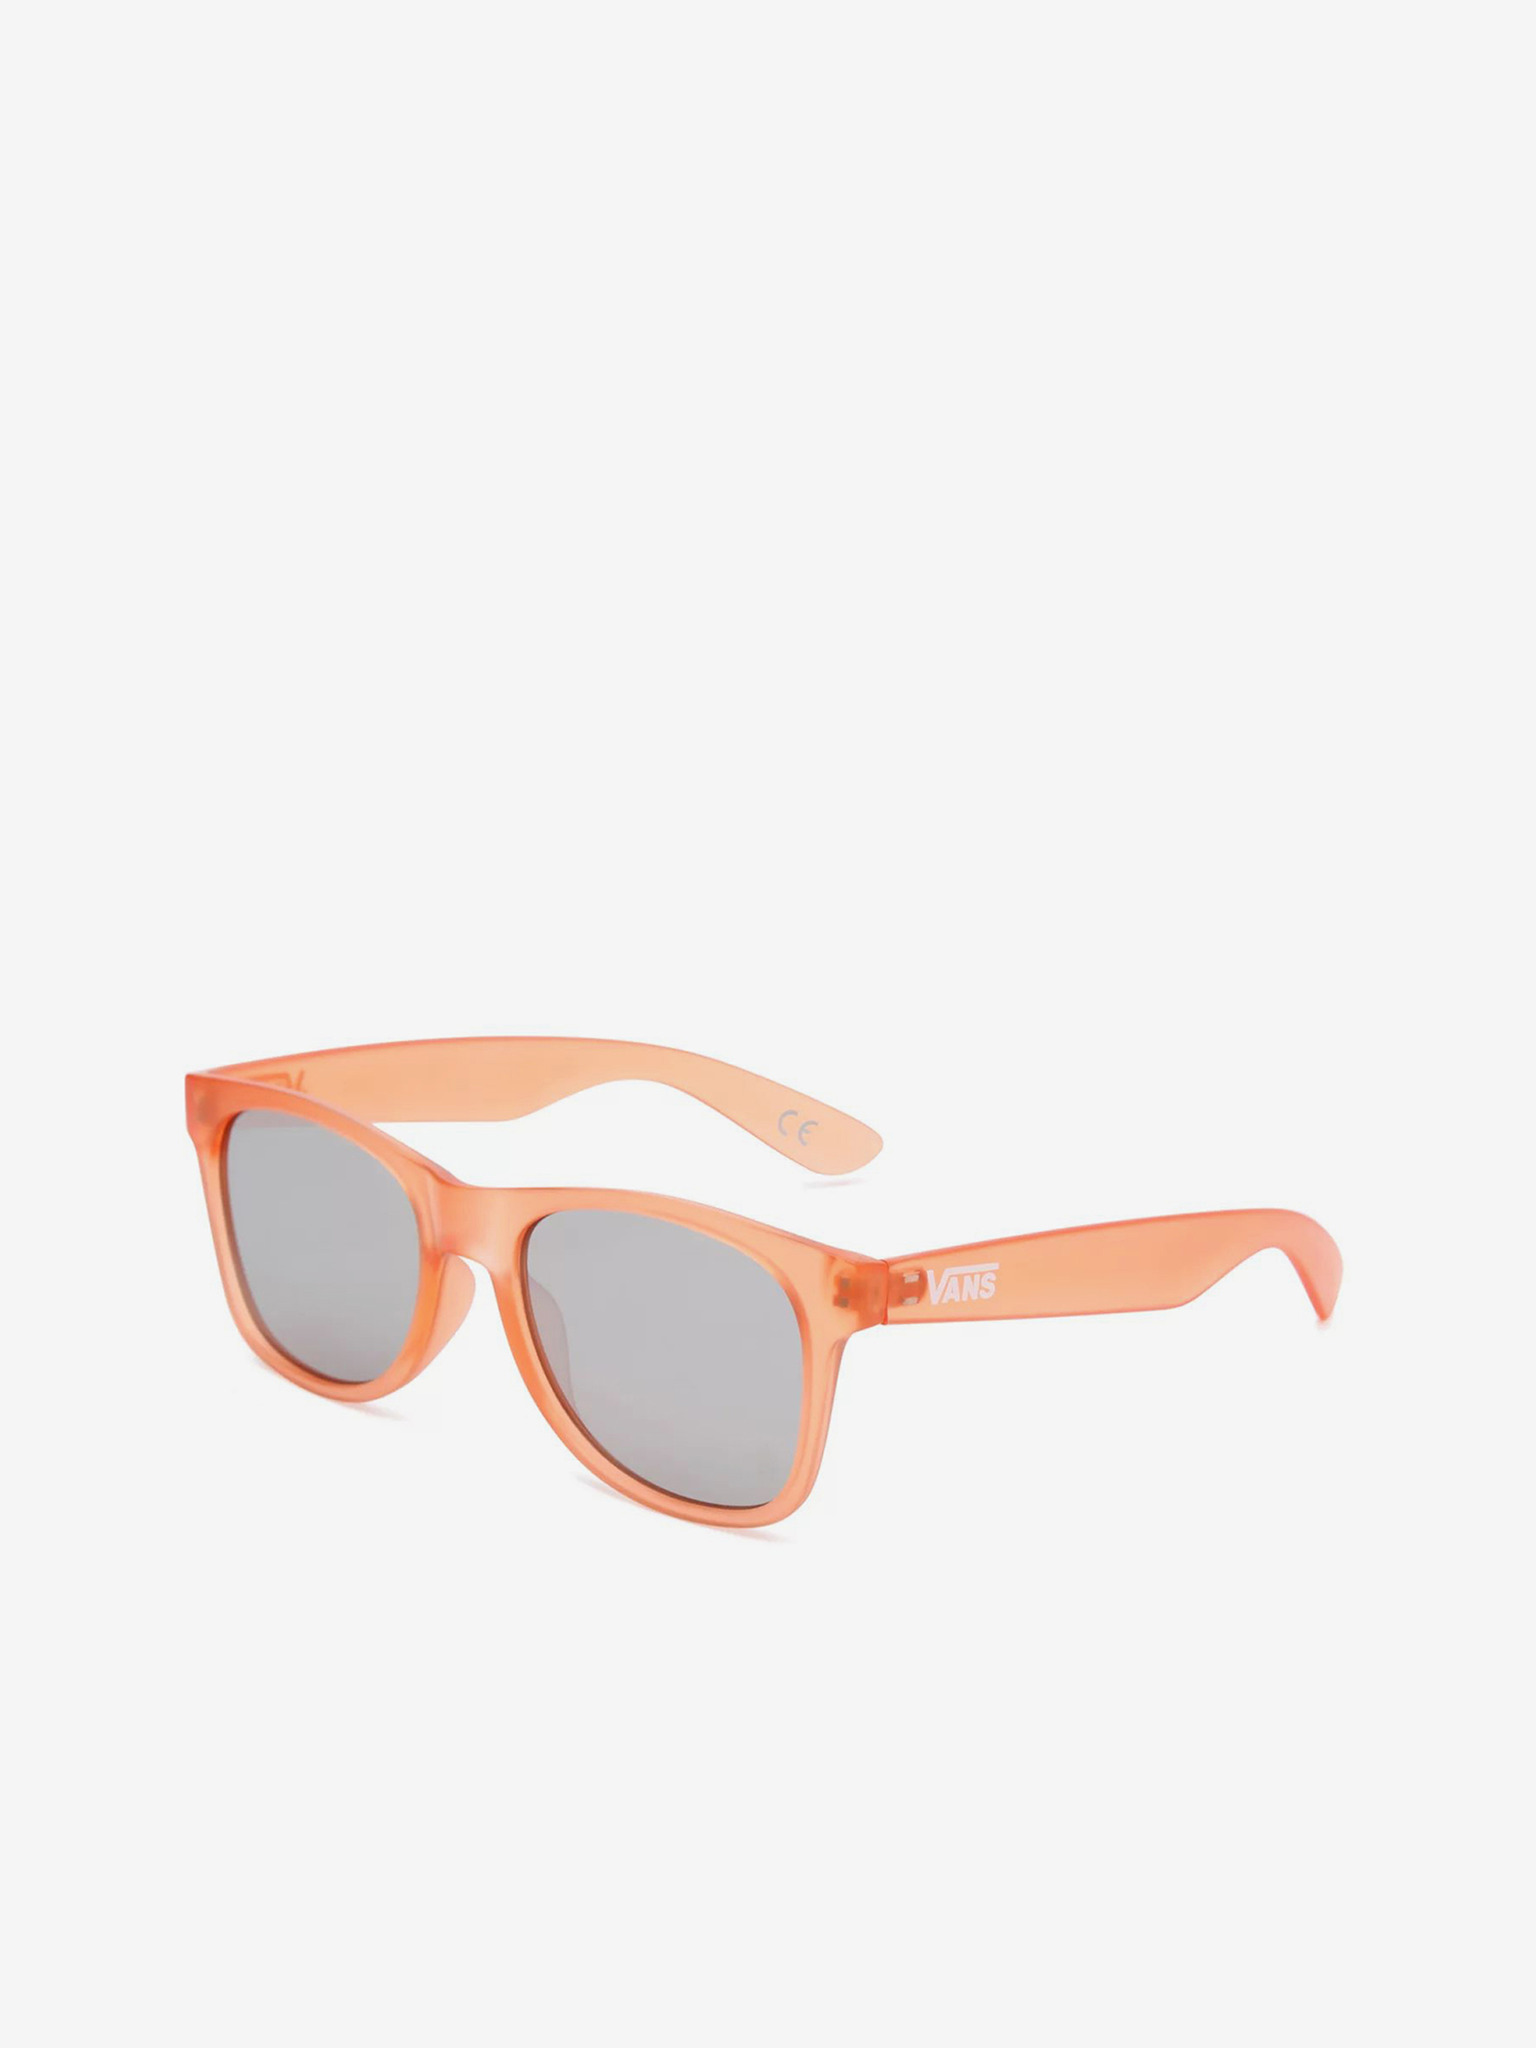 Vans - Spicoli Flat Sunglasses Shades